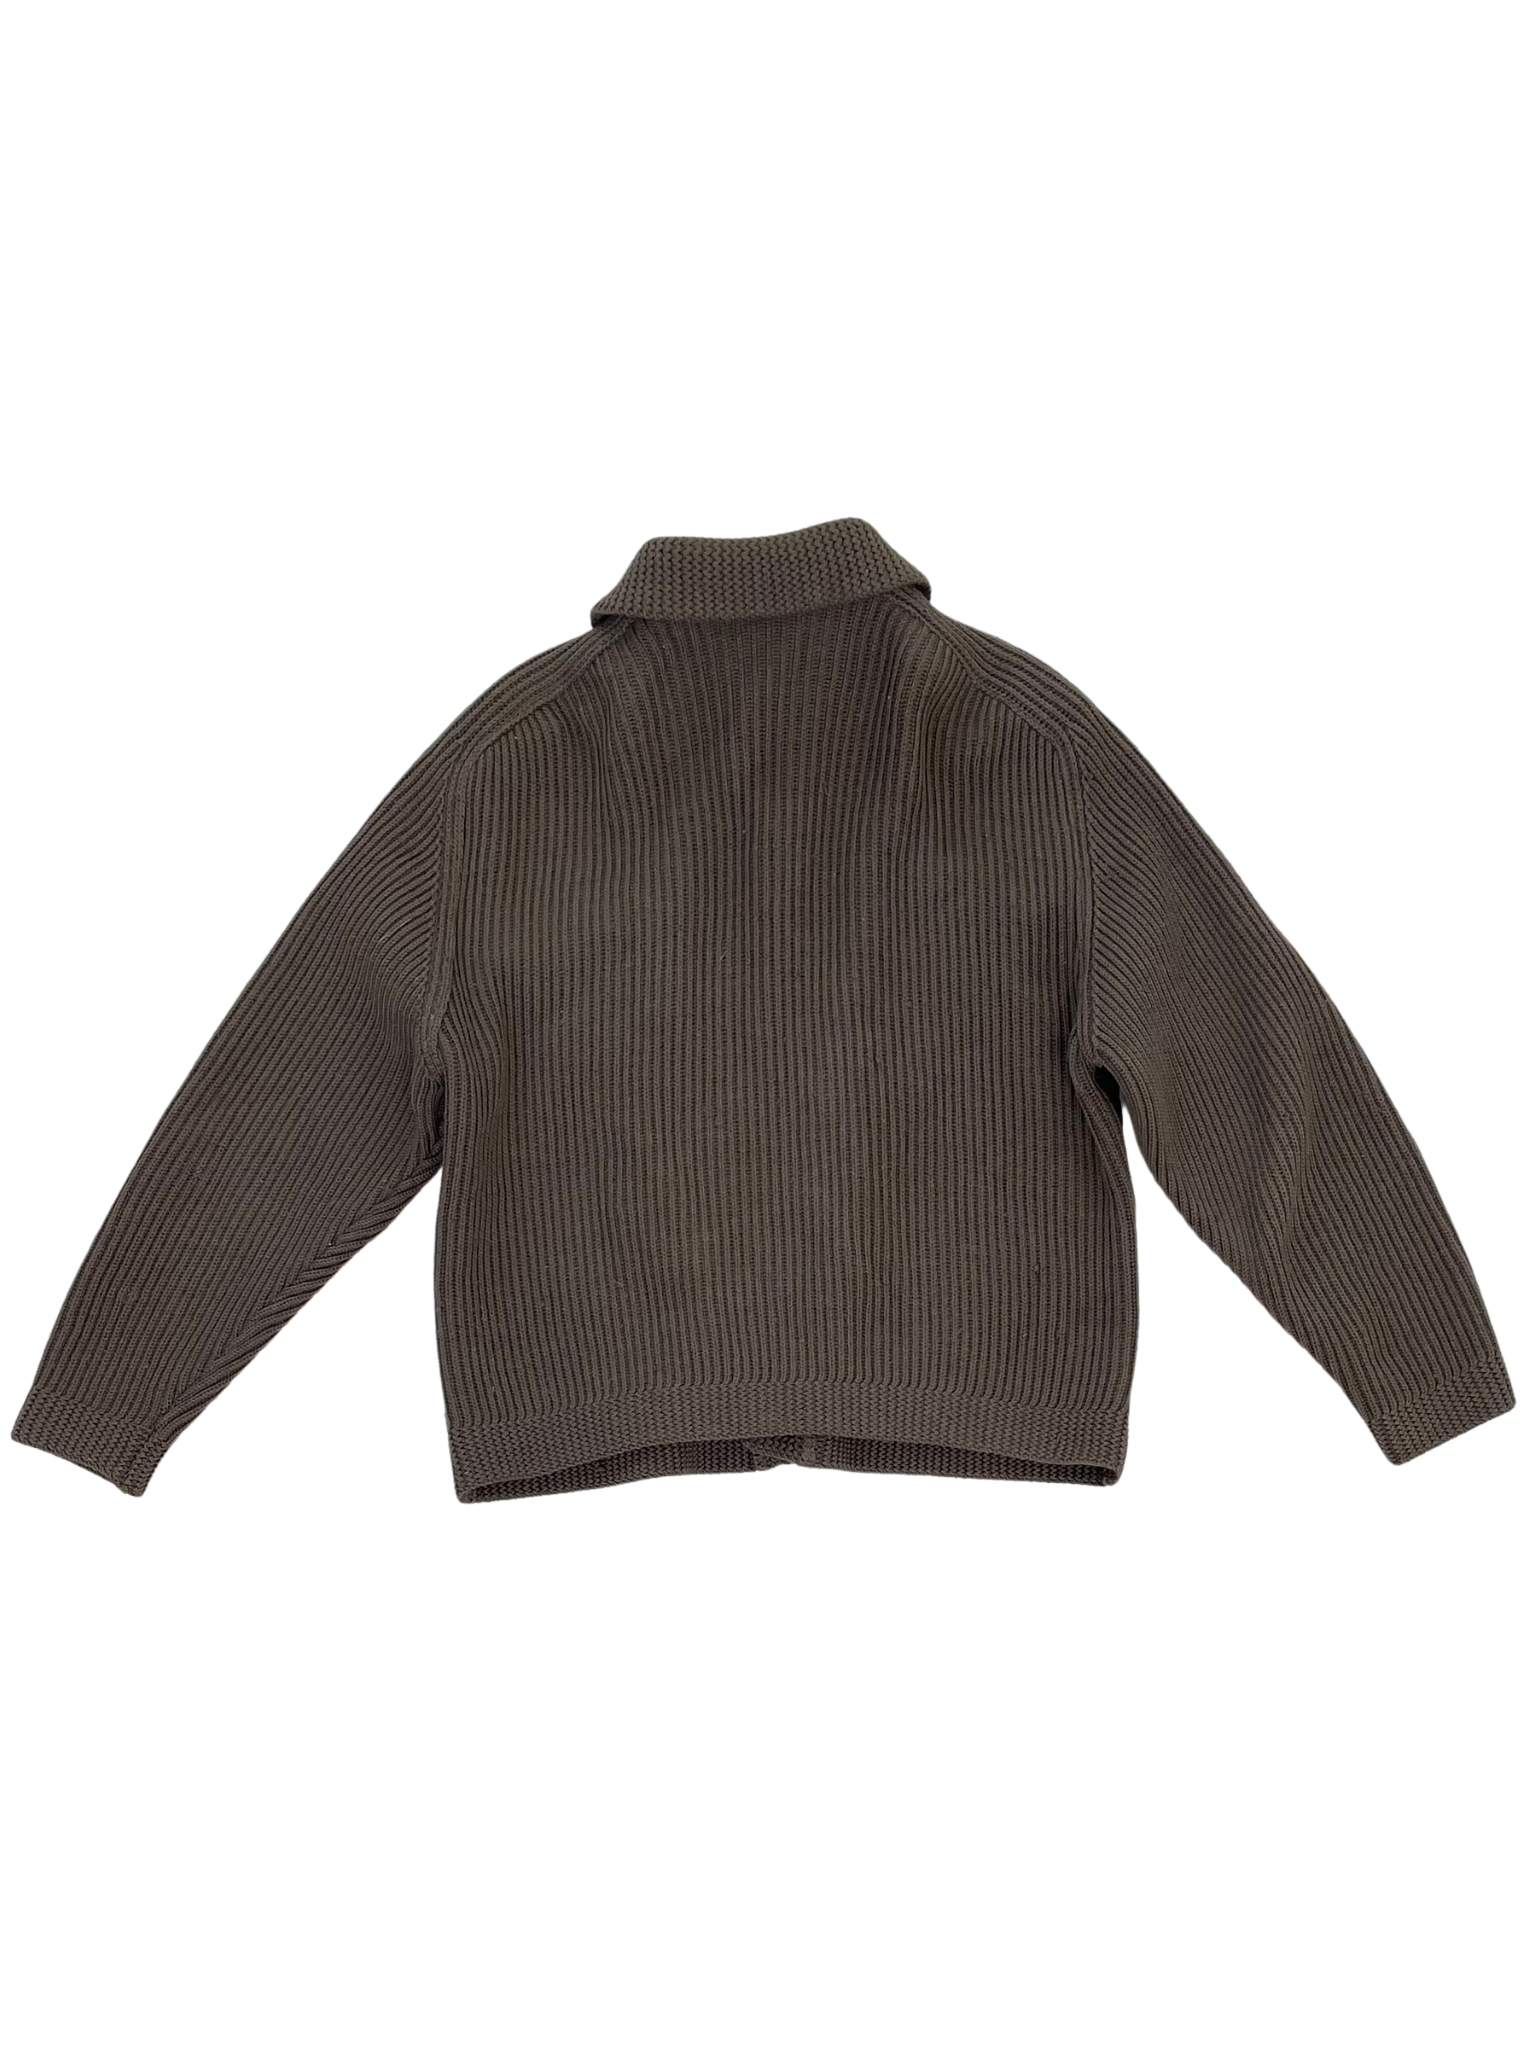 70s suede wool knit jacket